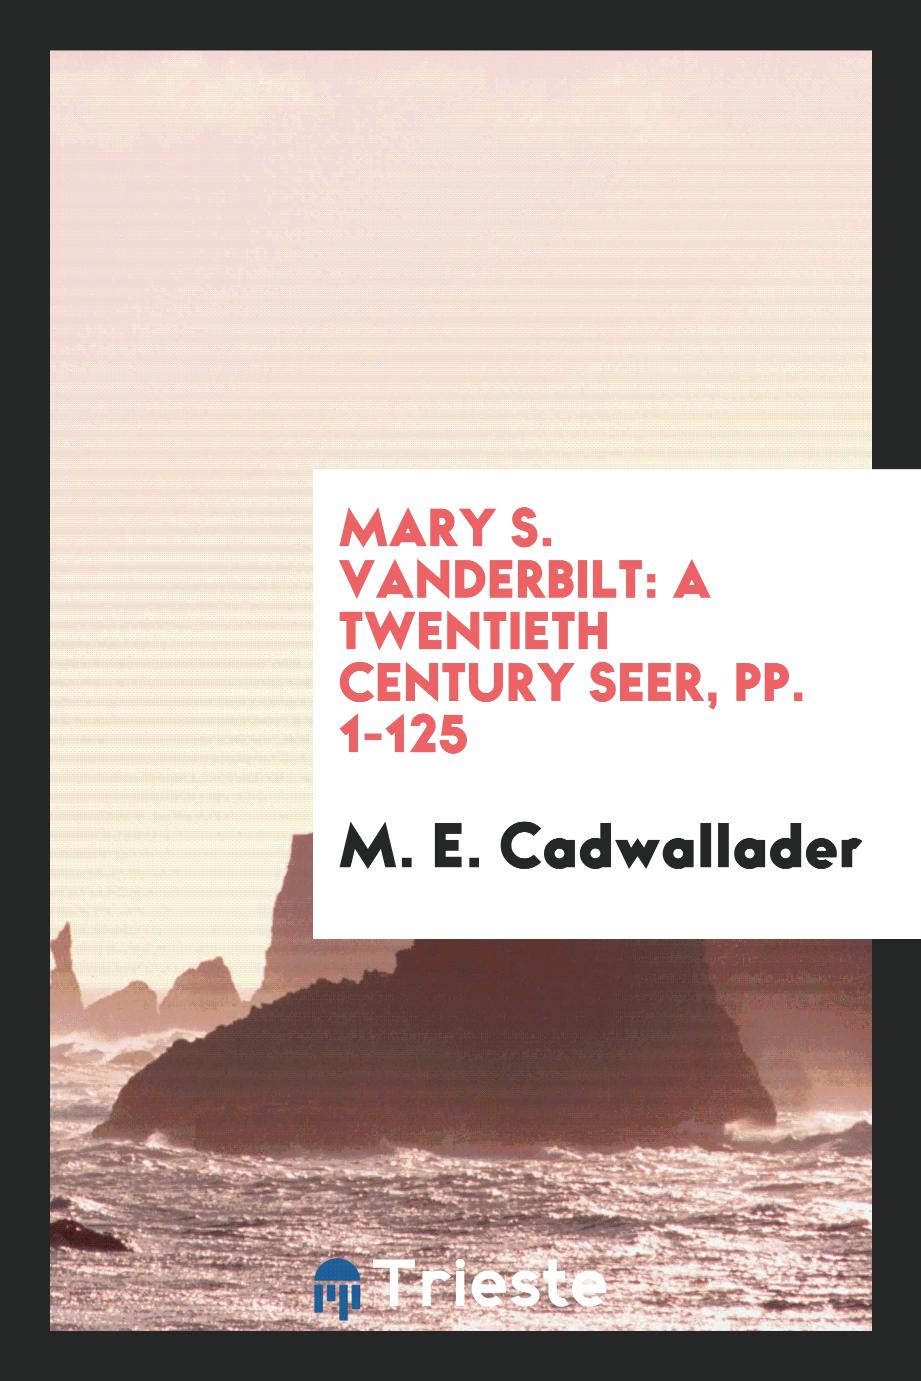 Mary S. Vanderbilt: A Twentieth Century Seer, pp. 1-125